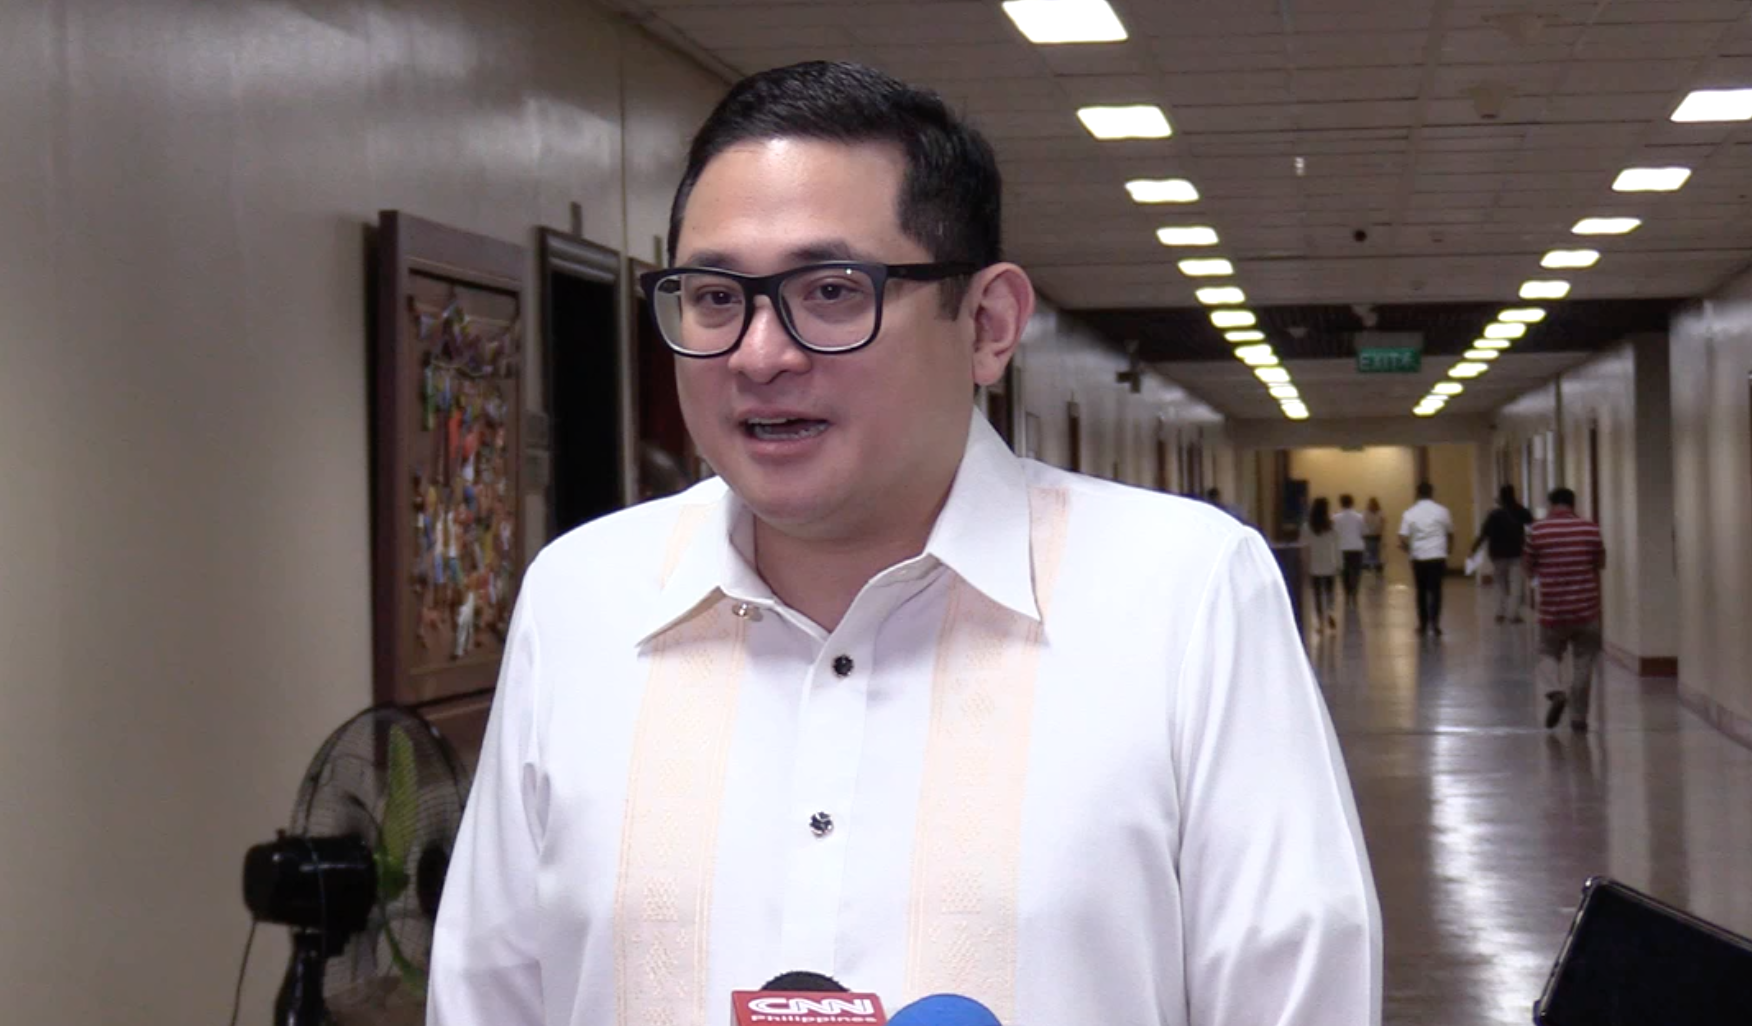 Lacson endorses Bam Aquino’s re-election as senator